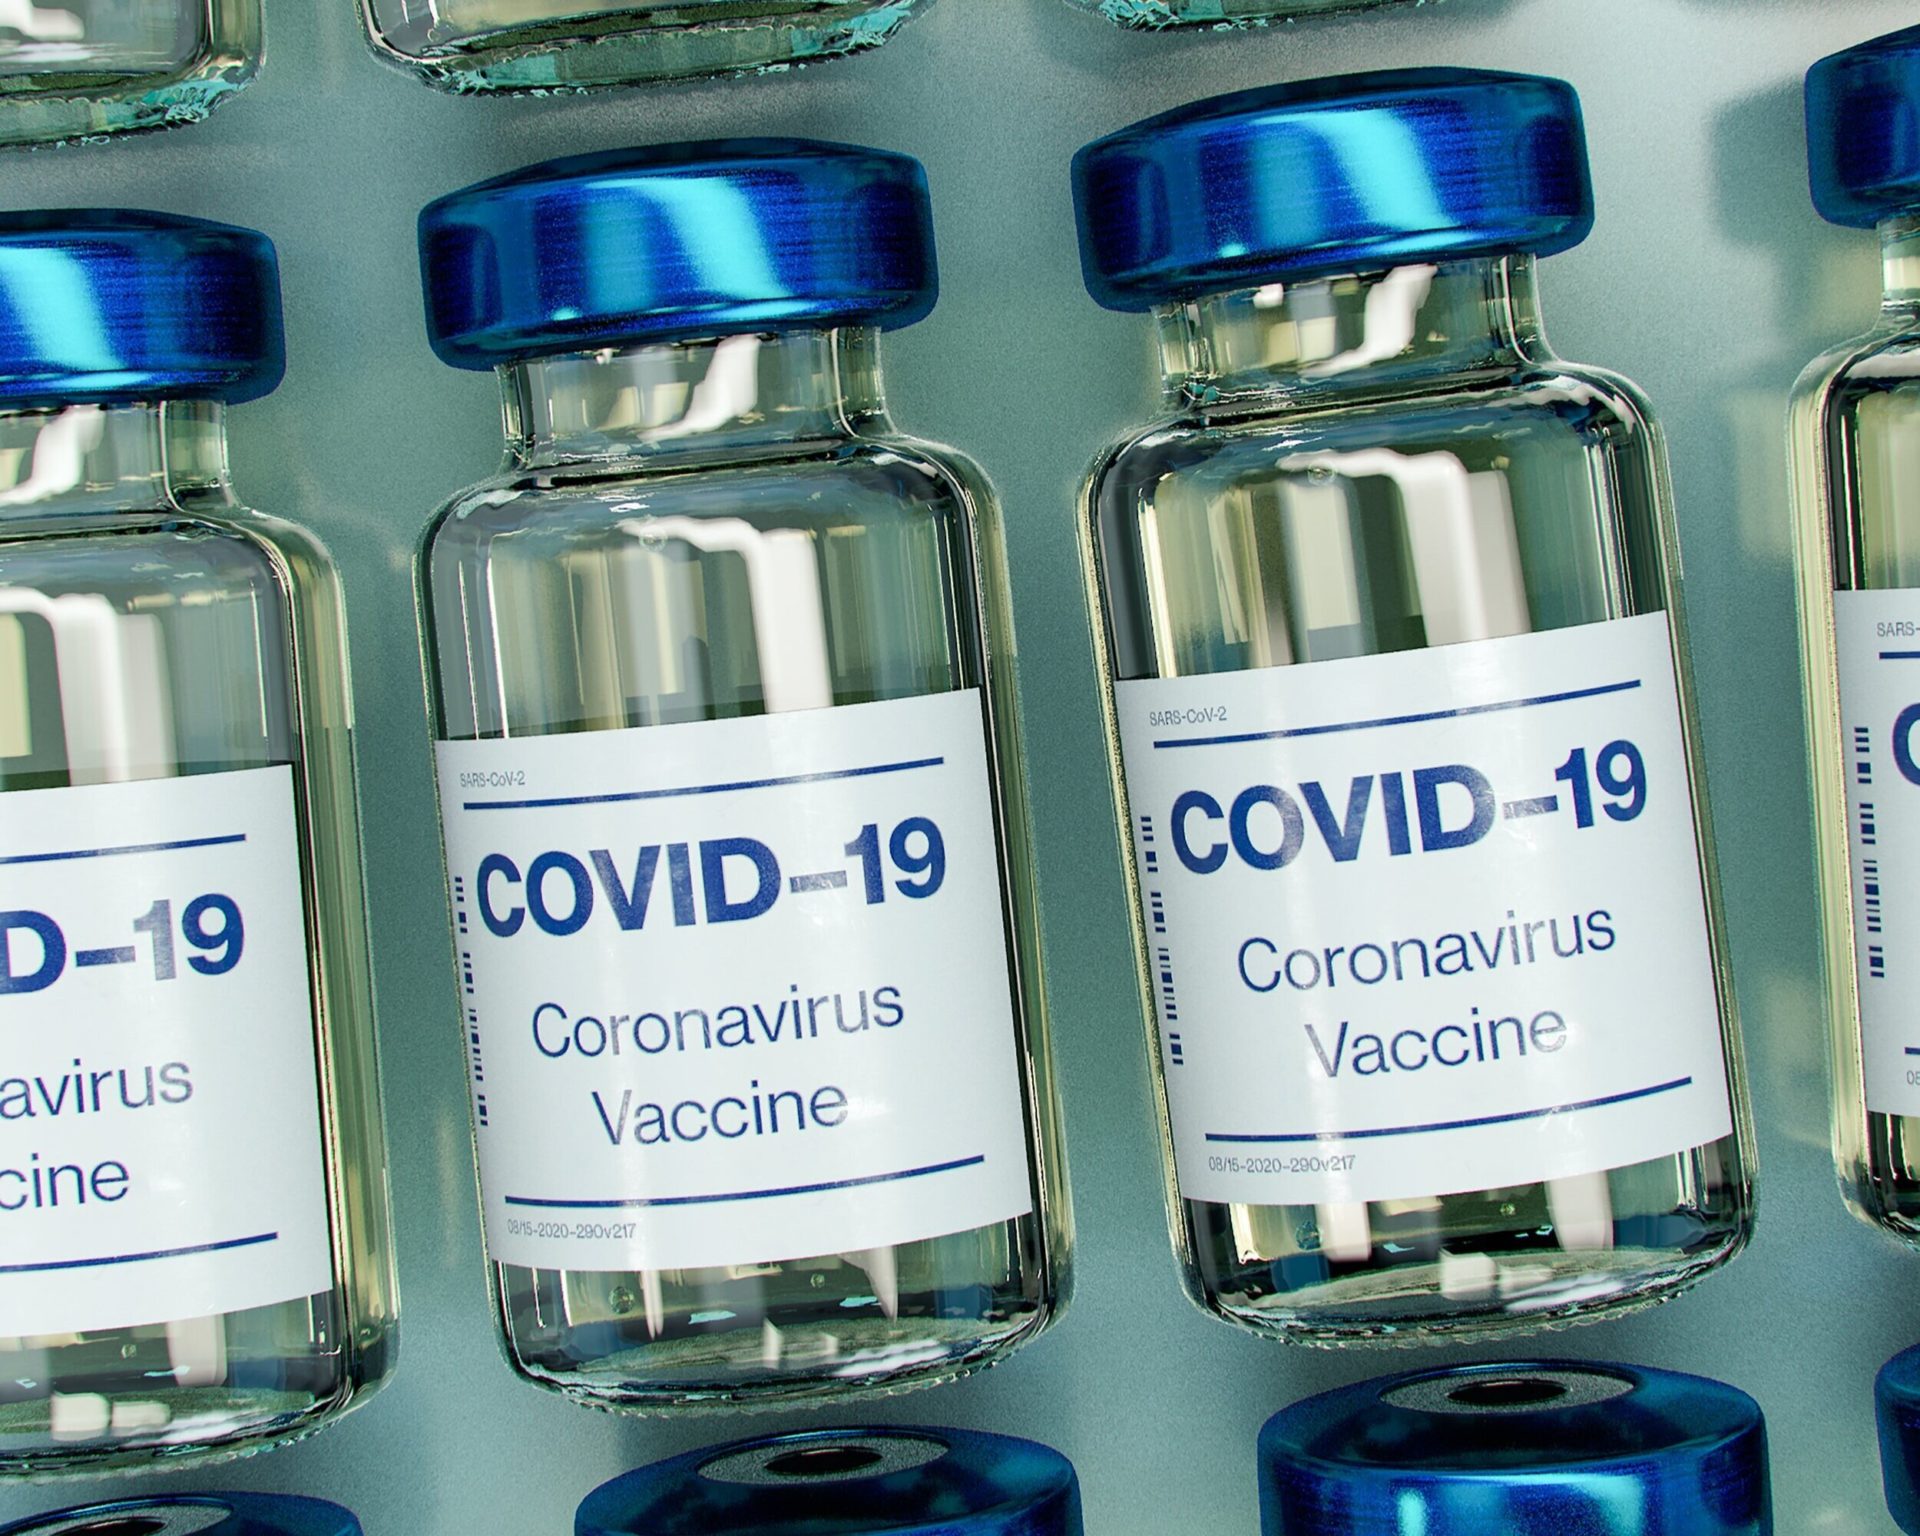 COVID-19 Vaccine Bottle Mockup (Photo by Daniel Schludi | Unsplash)